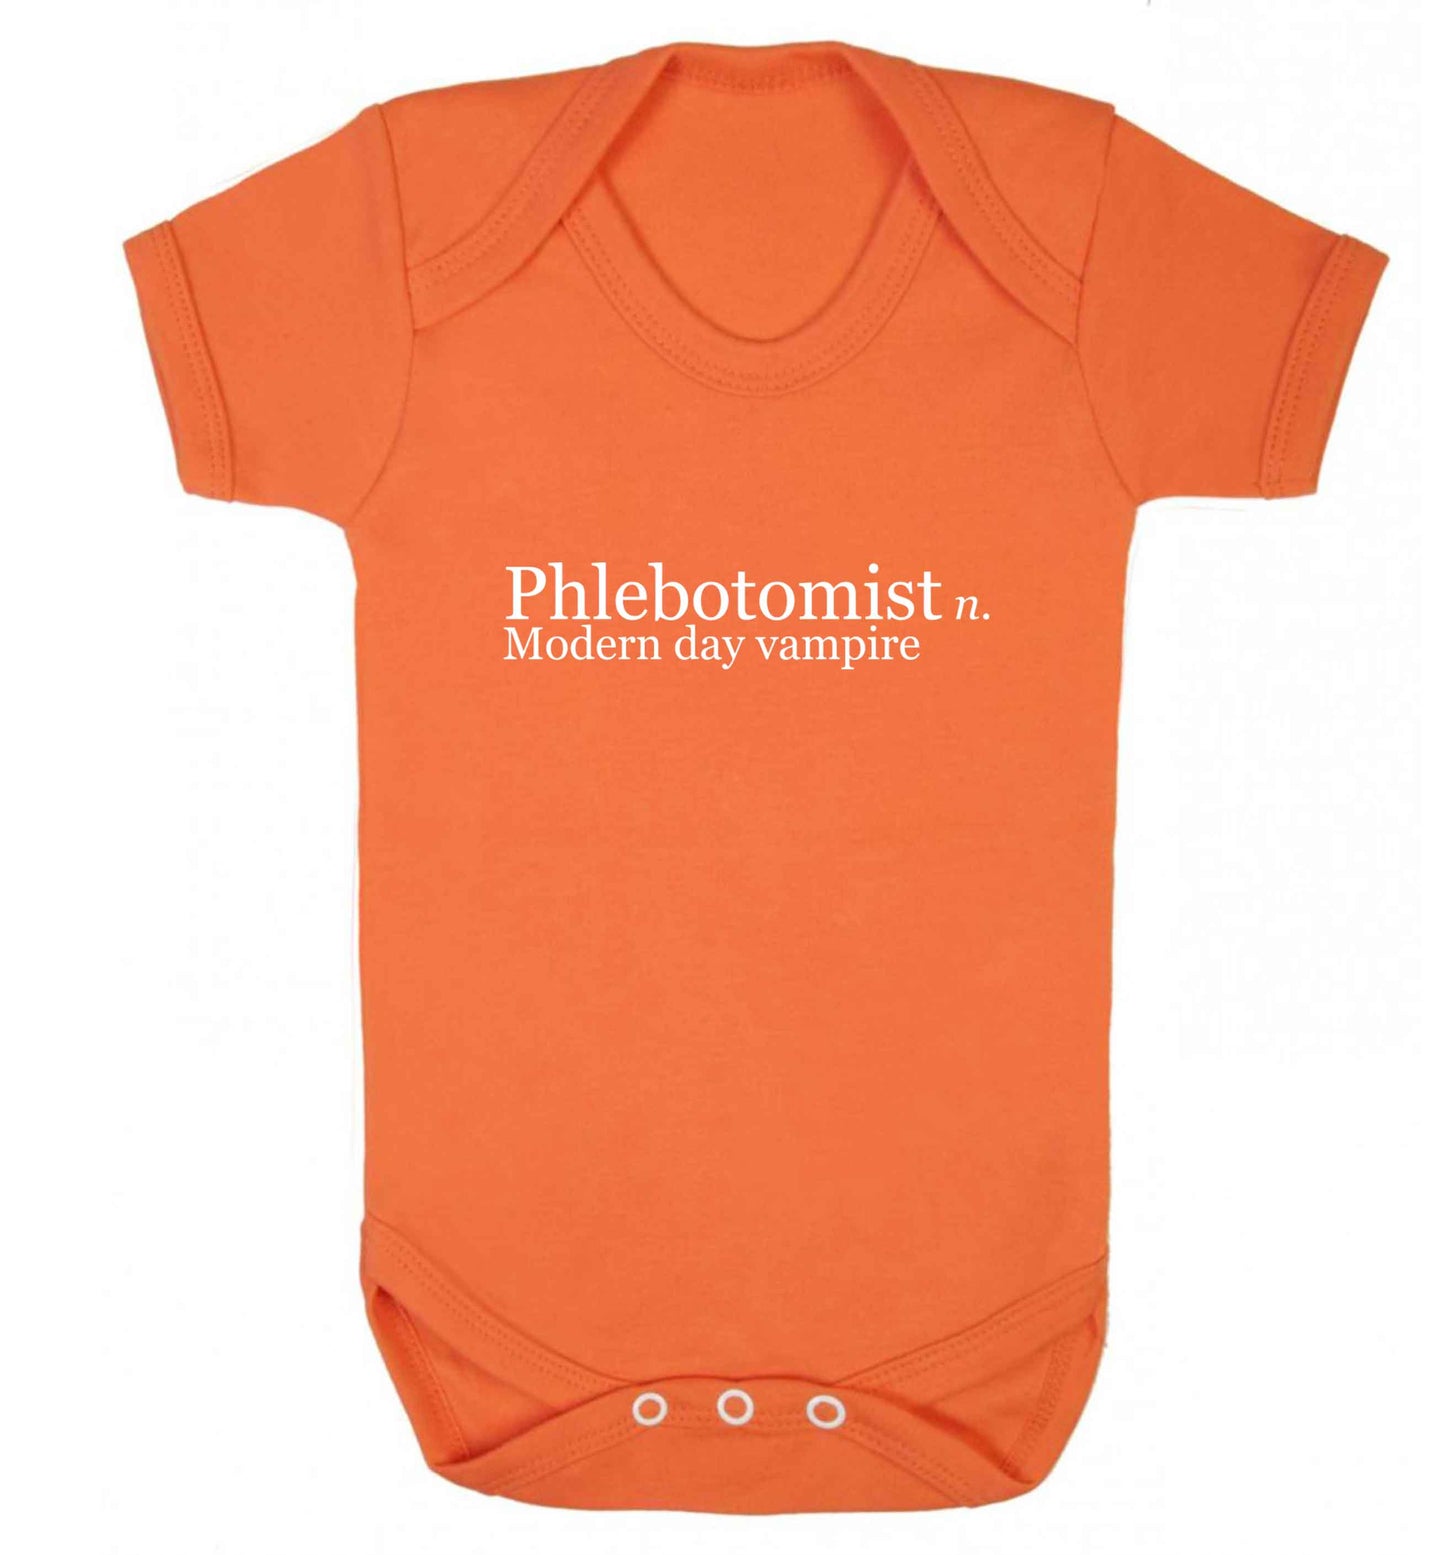 Phlebotomist - Modern day vampire baby vest orange 18-24 months